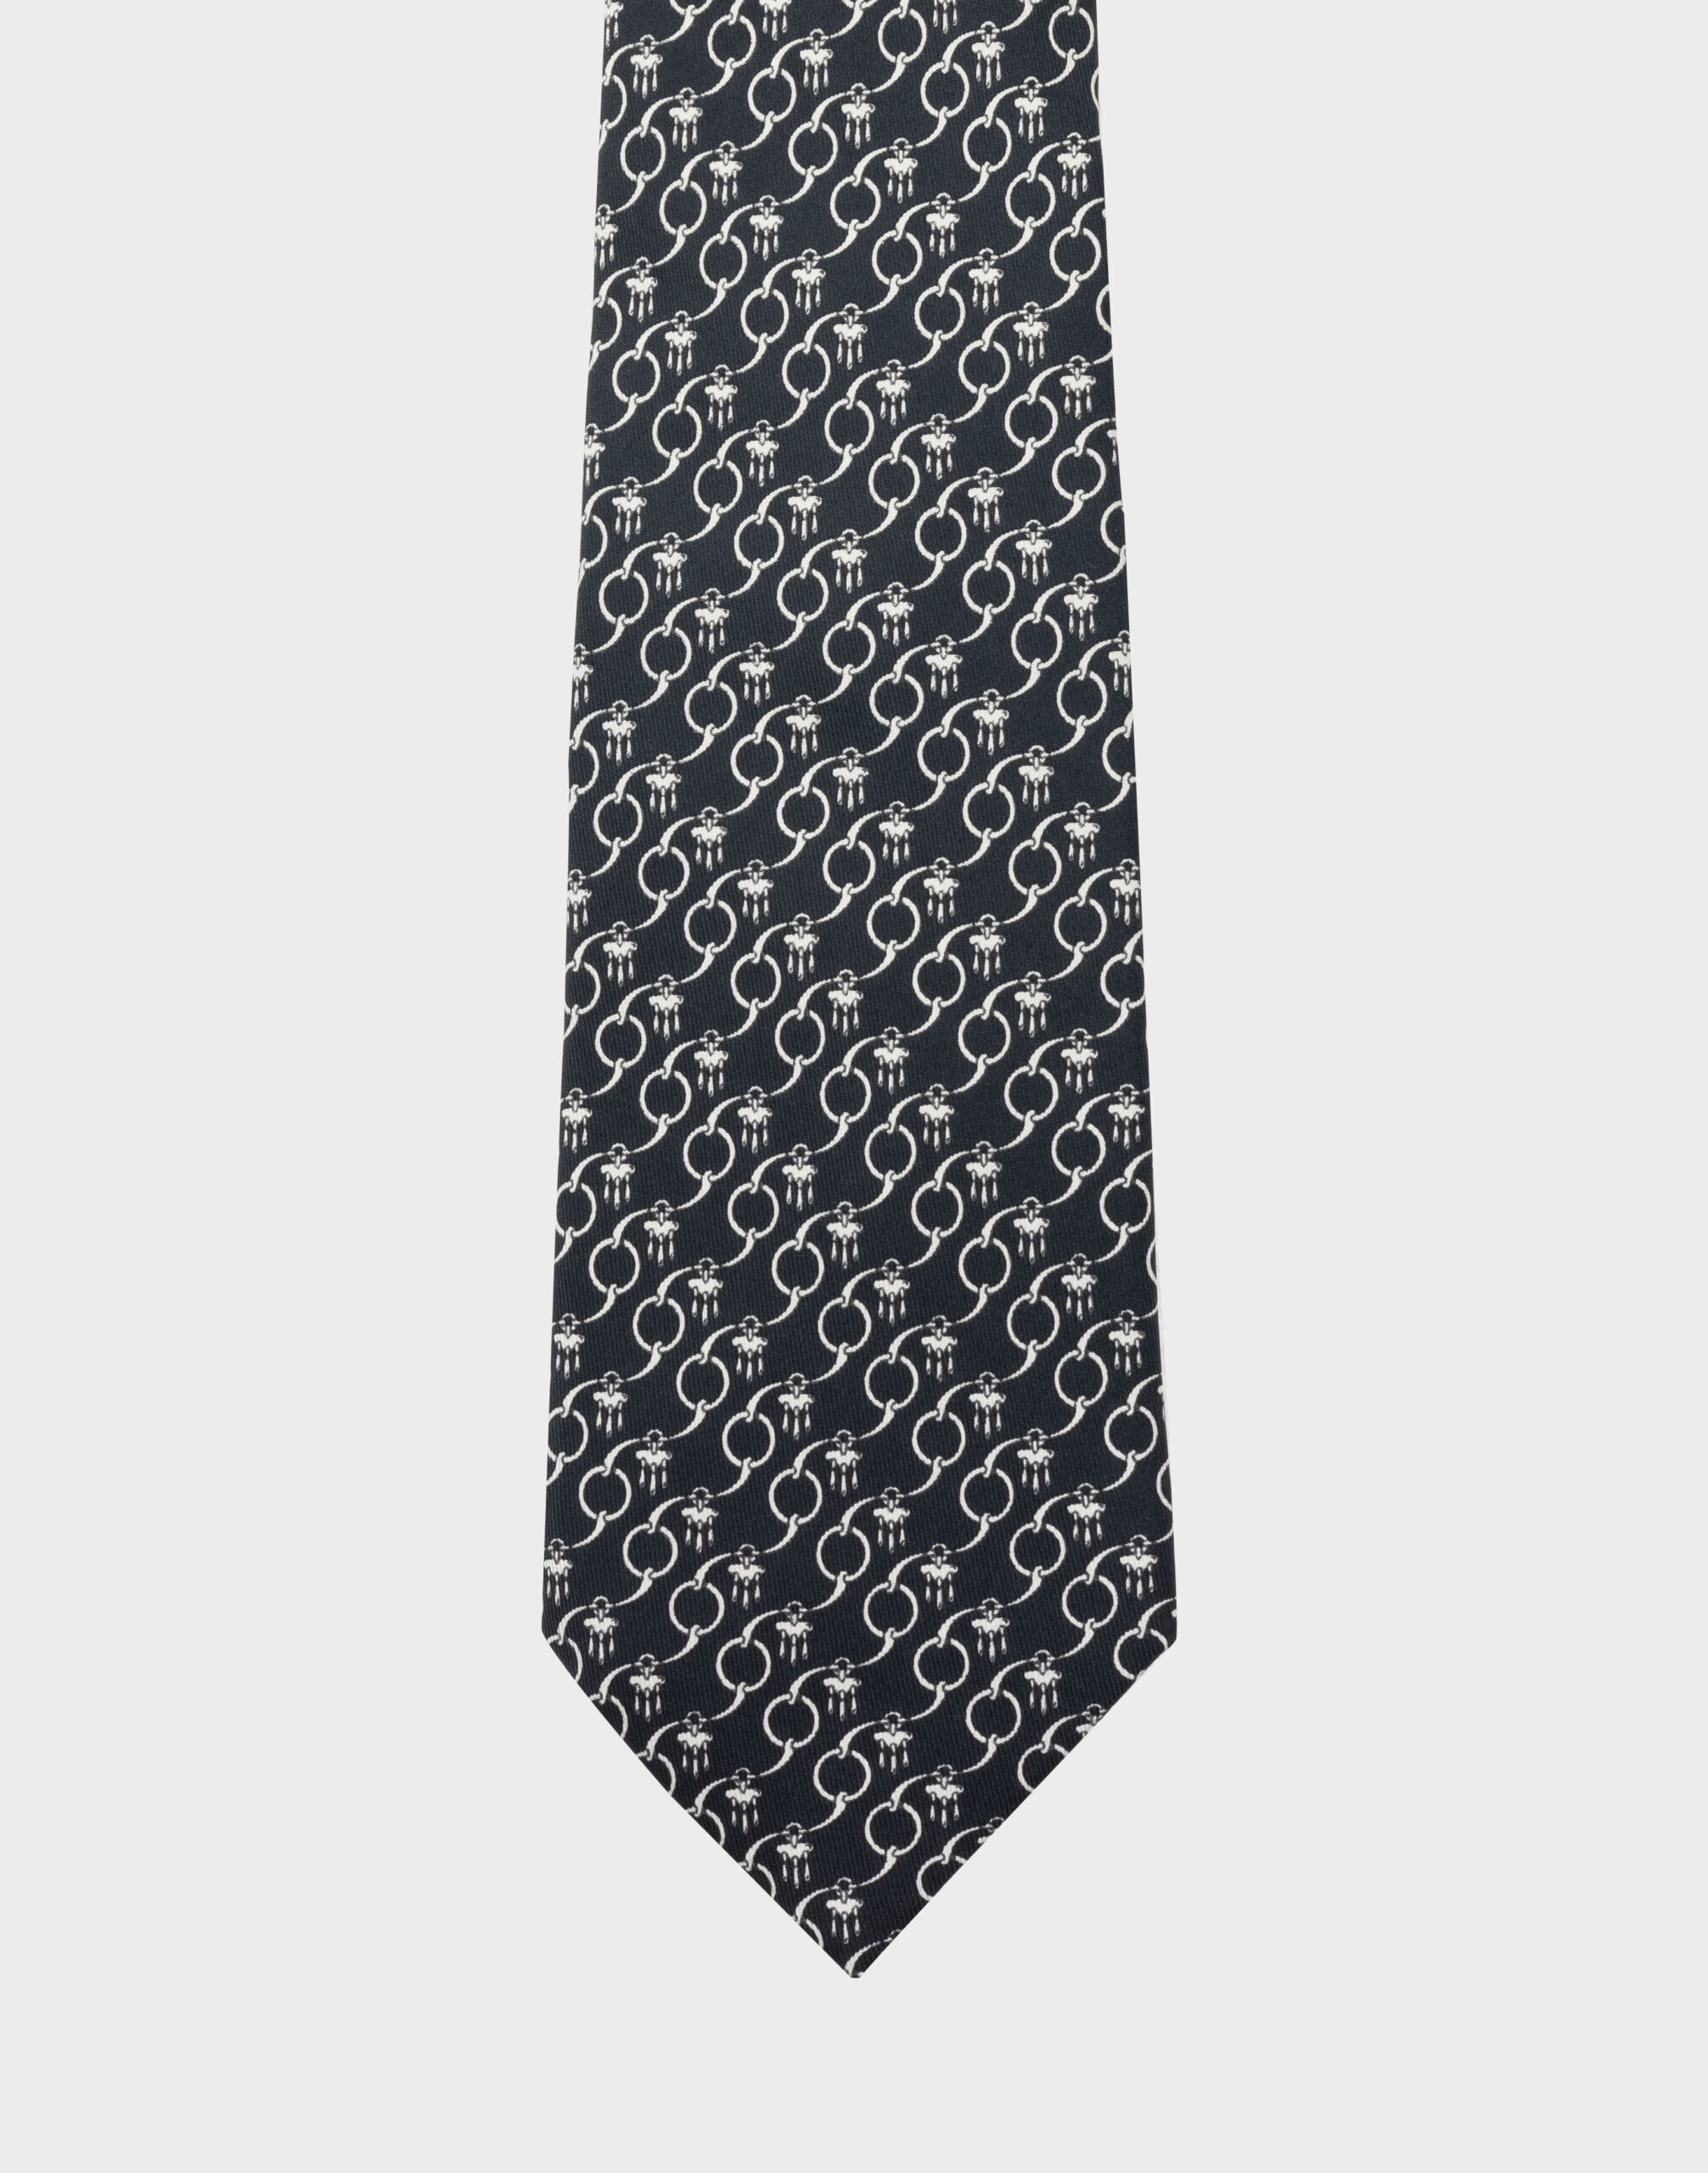 Hermes black silk tie with white chain pattern